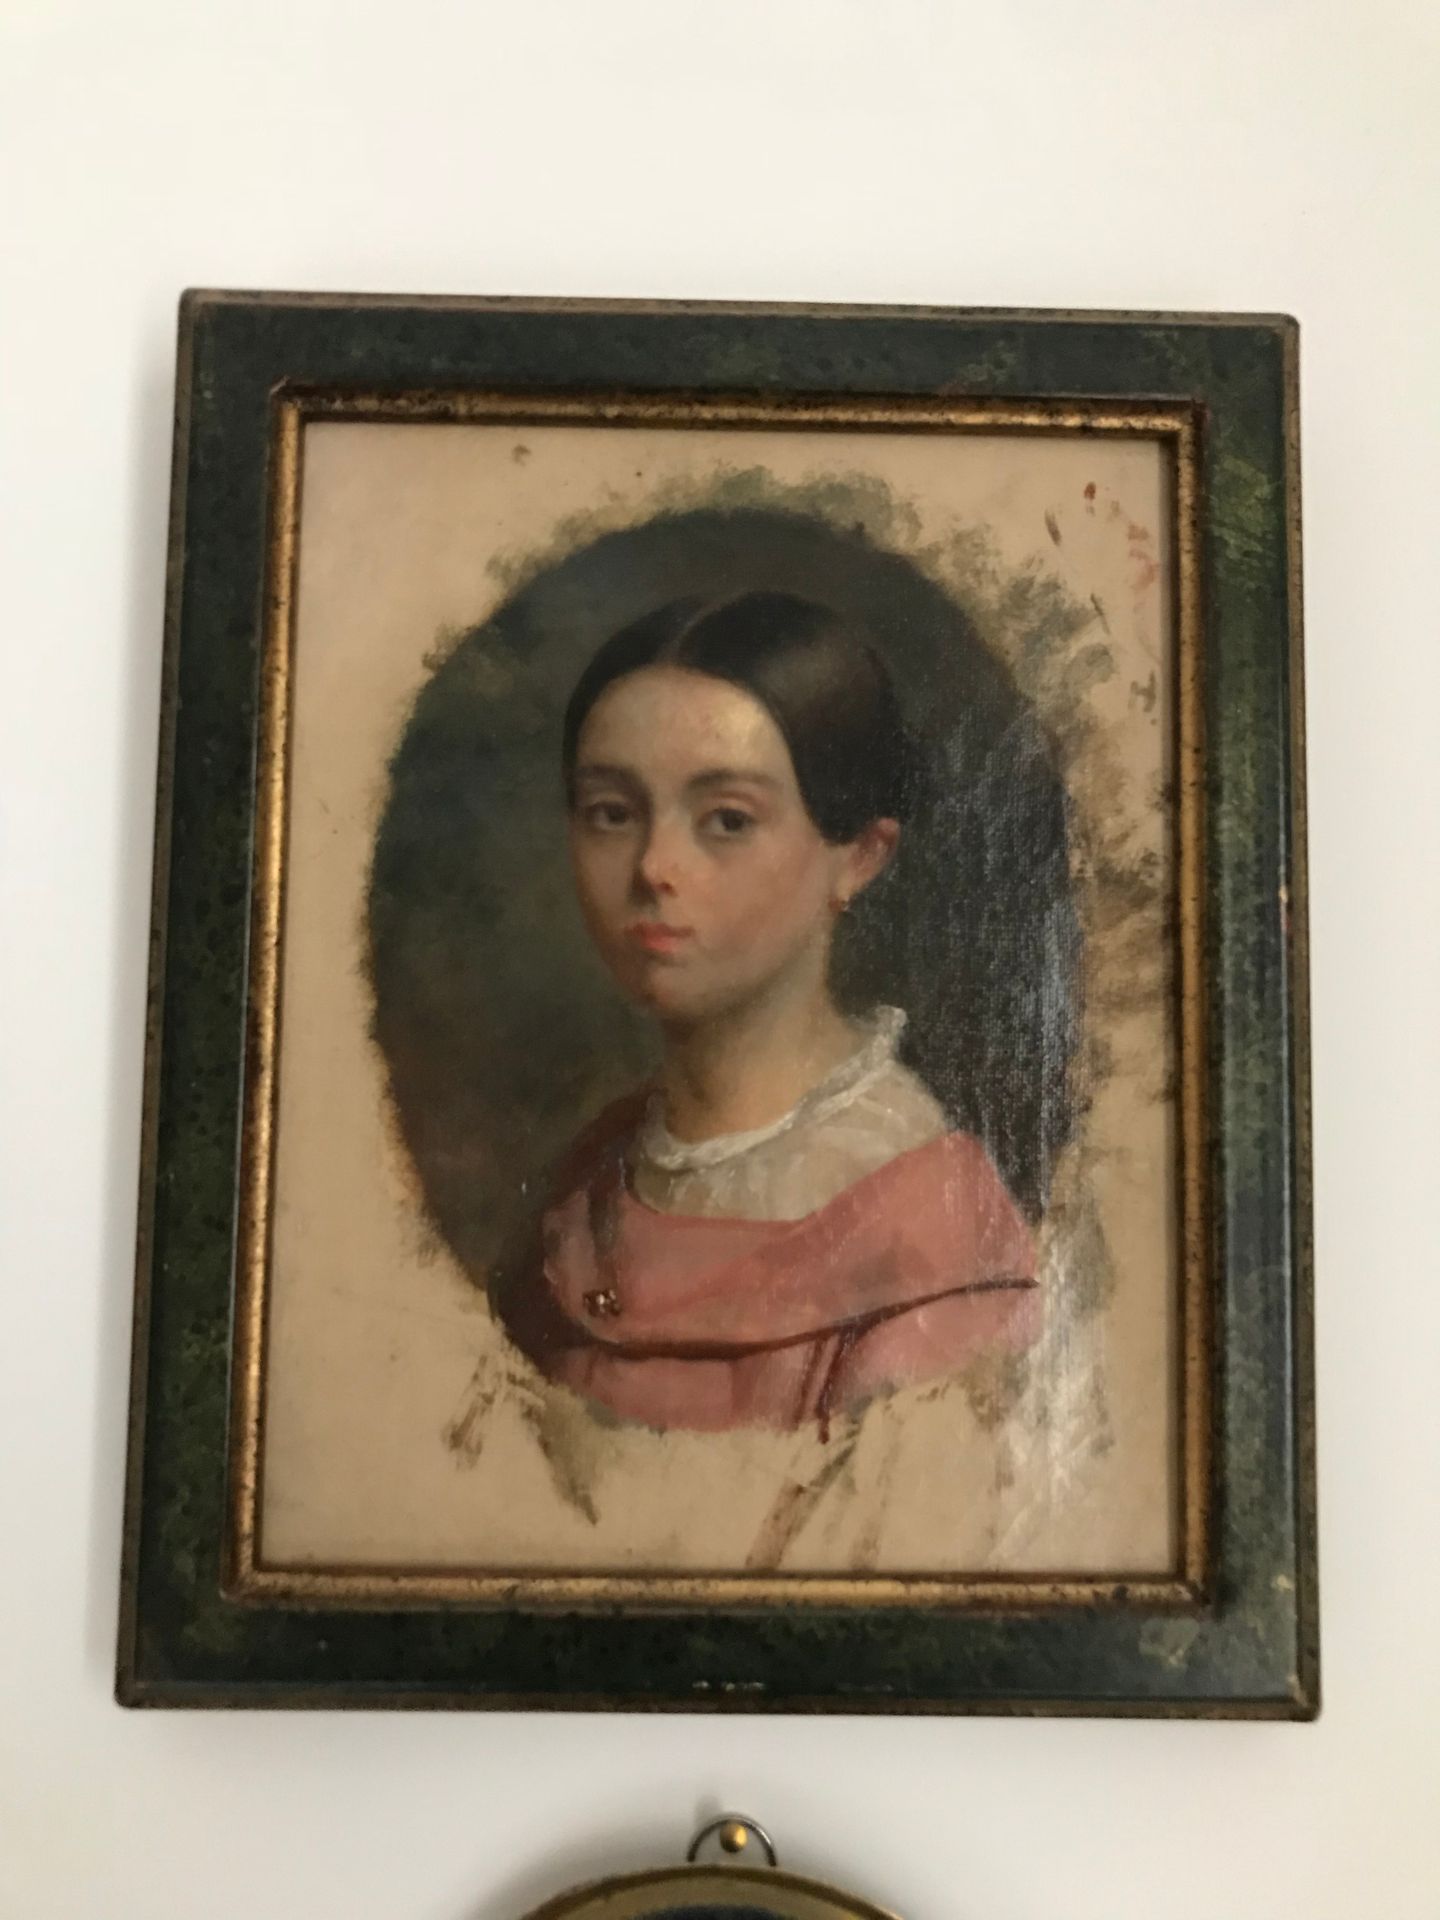 ECOLE FRANCAISE DU XIXème siècle 穿粉红色裙子的年轻女孩
布面油画
高24厘米；宽19厘米。